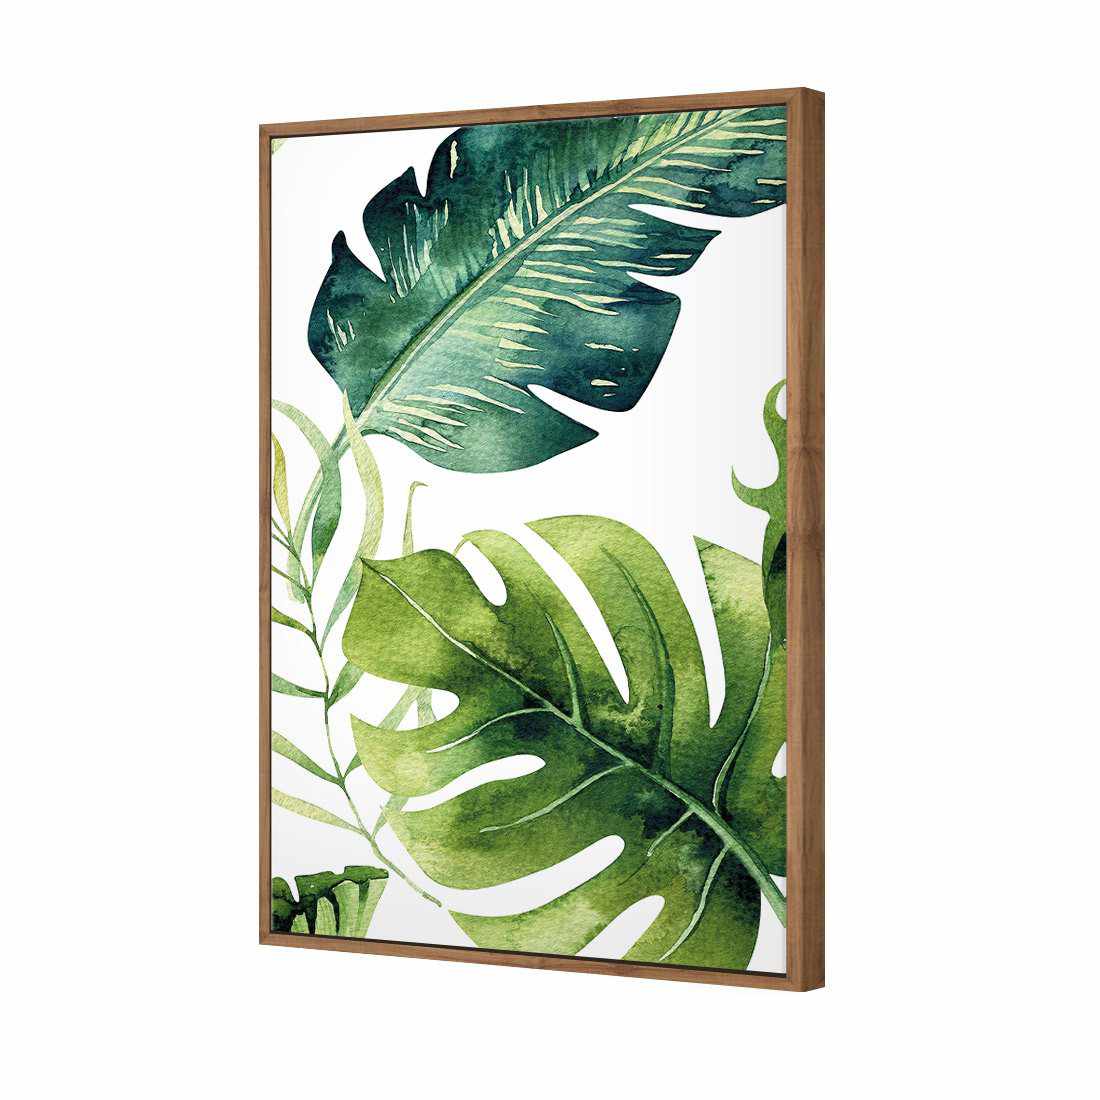 Fascinating Foliage Version 02 Canvas Art-Canvas-Wall Art Designs-45x30cm-Canvas - Natural Frame-Wall Art Designs